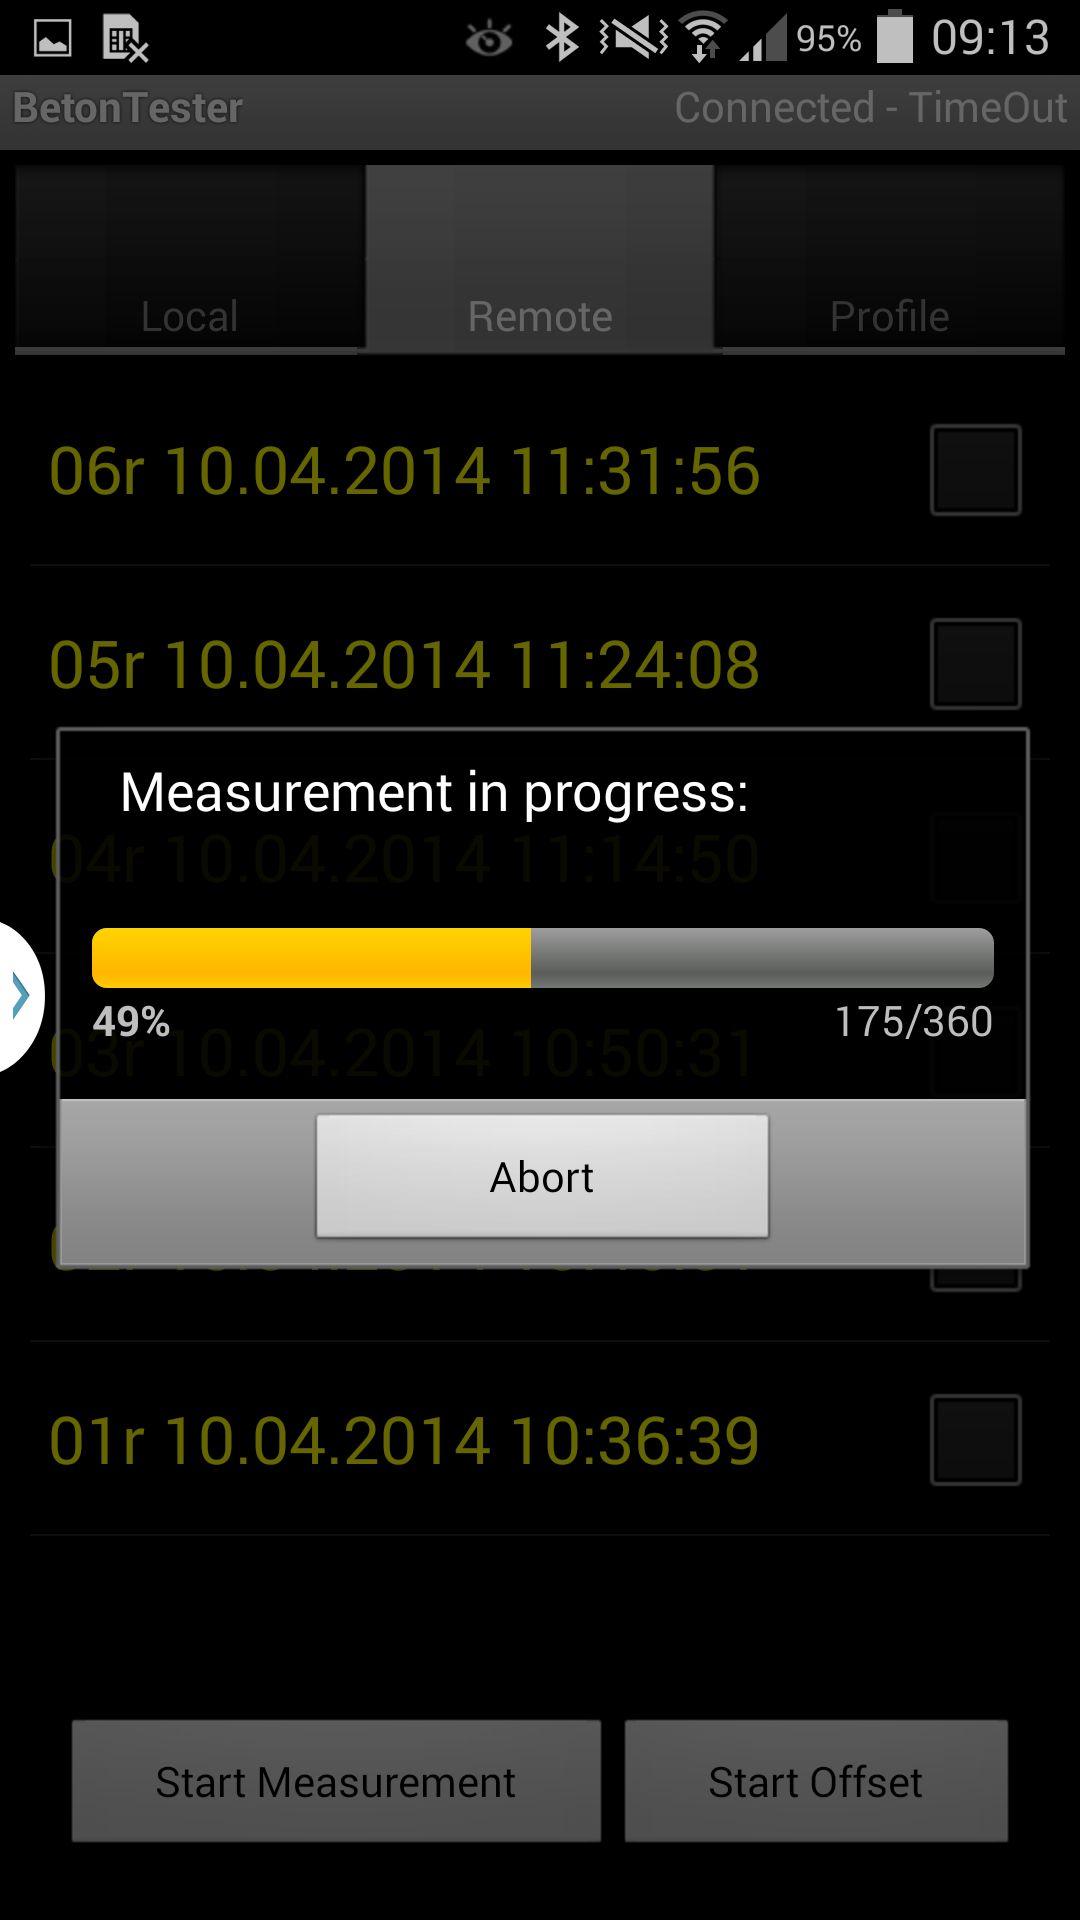 Measurement progress bar